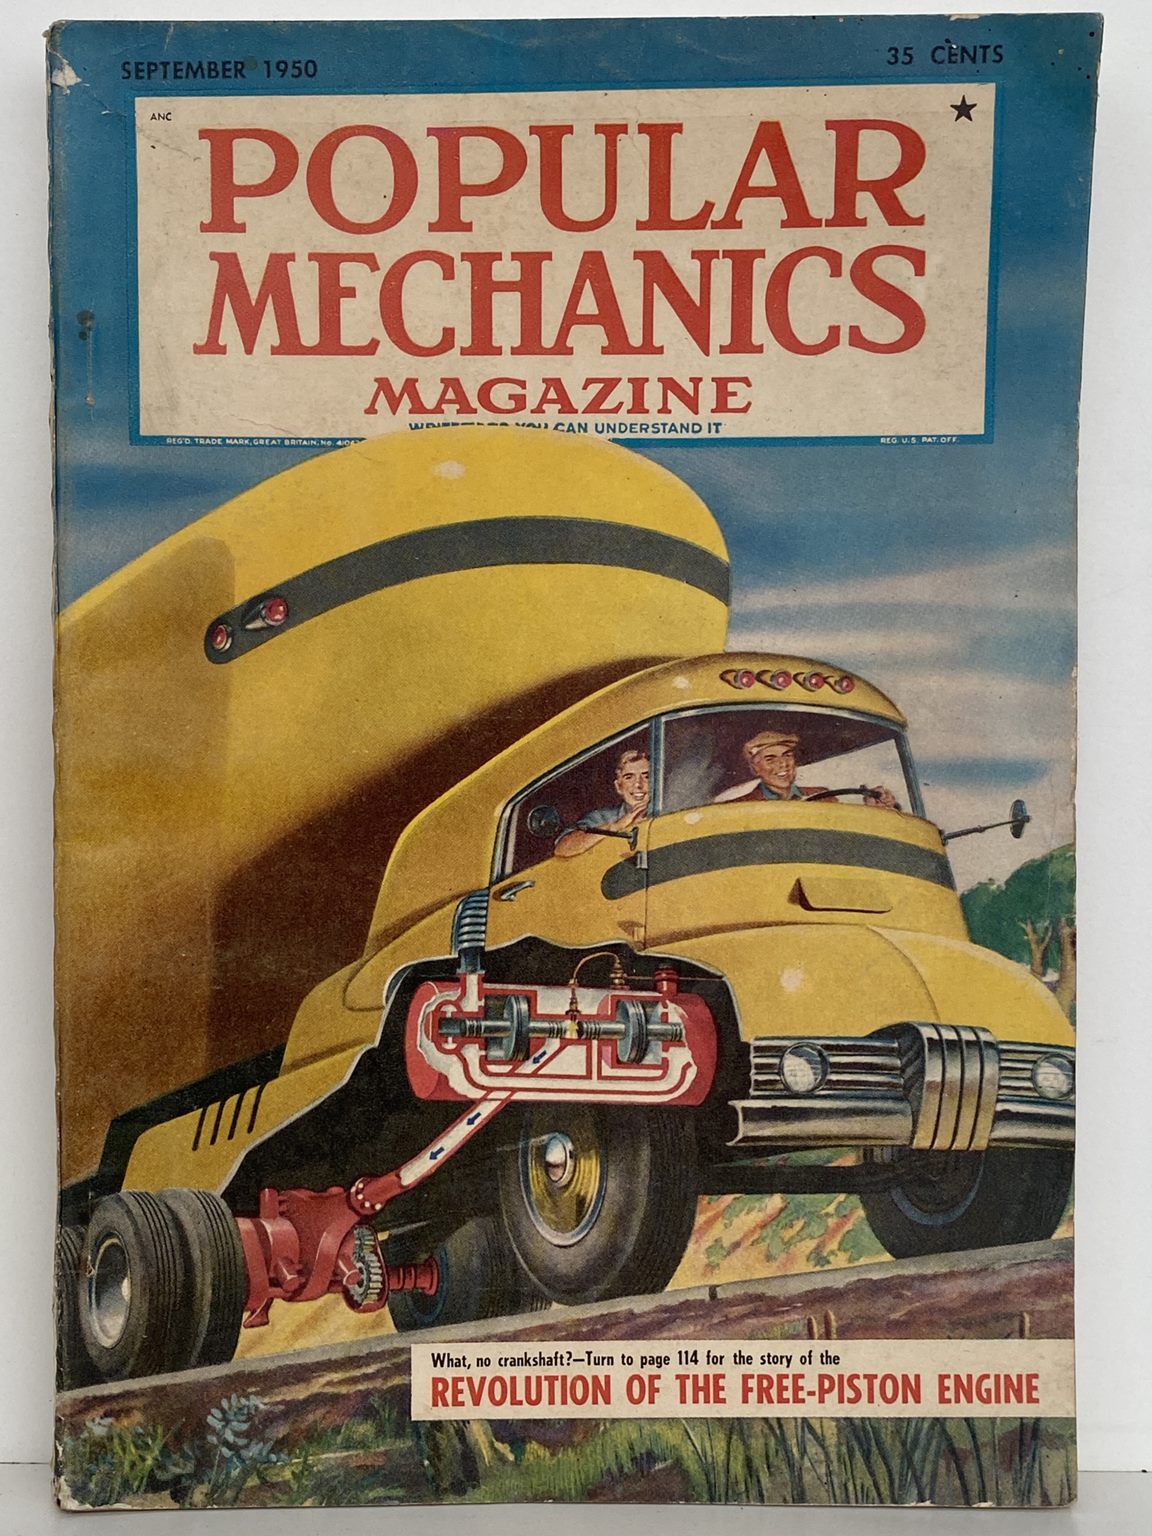 VINTAGE MAGAZINE: Popular Mechanics - Vol. 94, No. 3 - September 1950